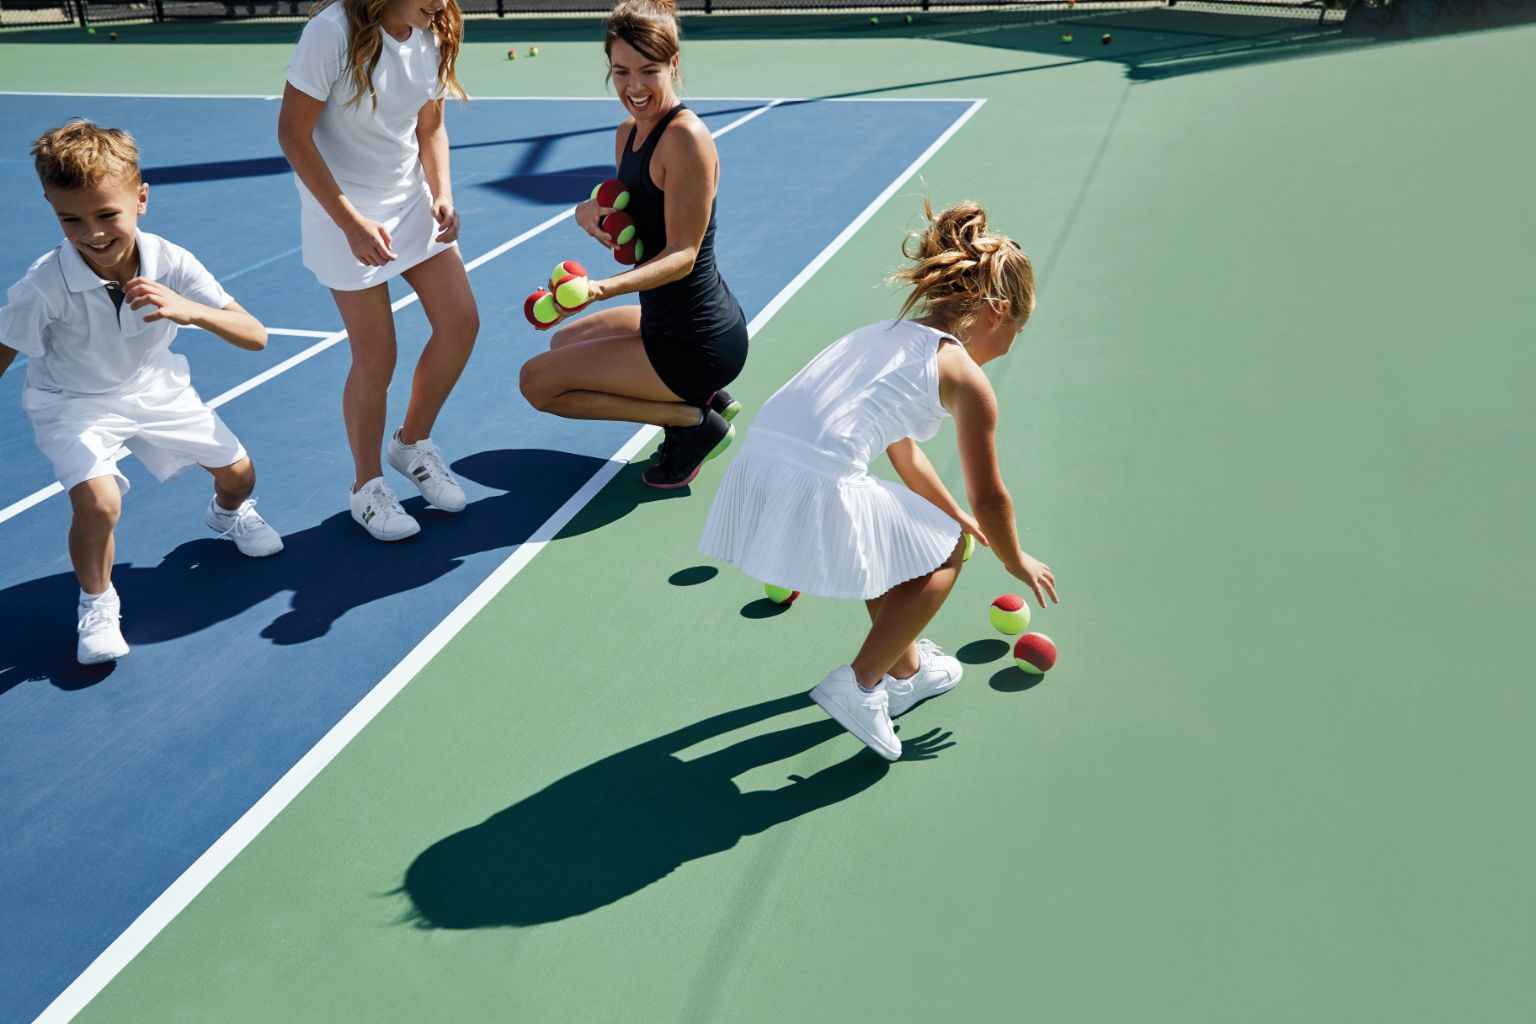 group of kids picking up tennis balls on a tennis court